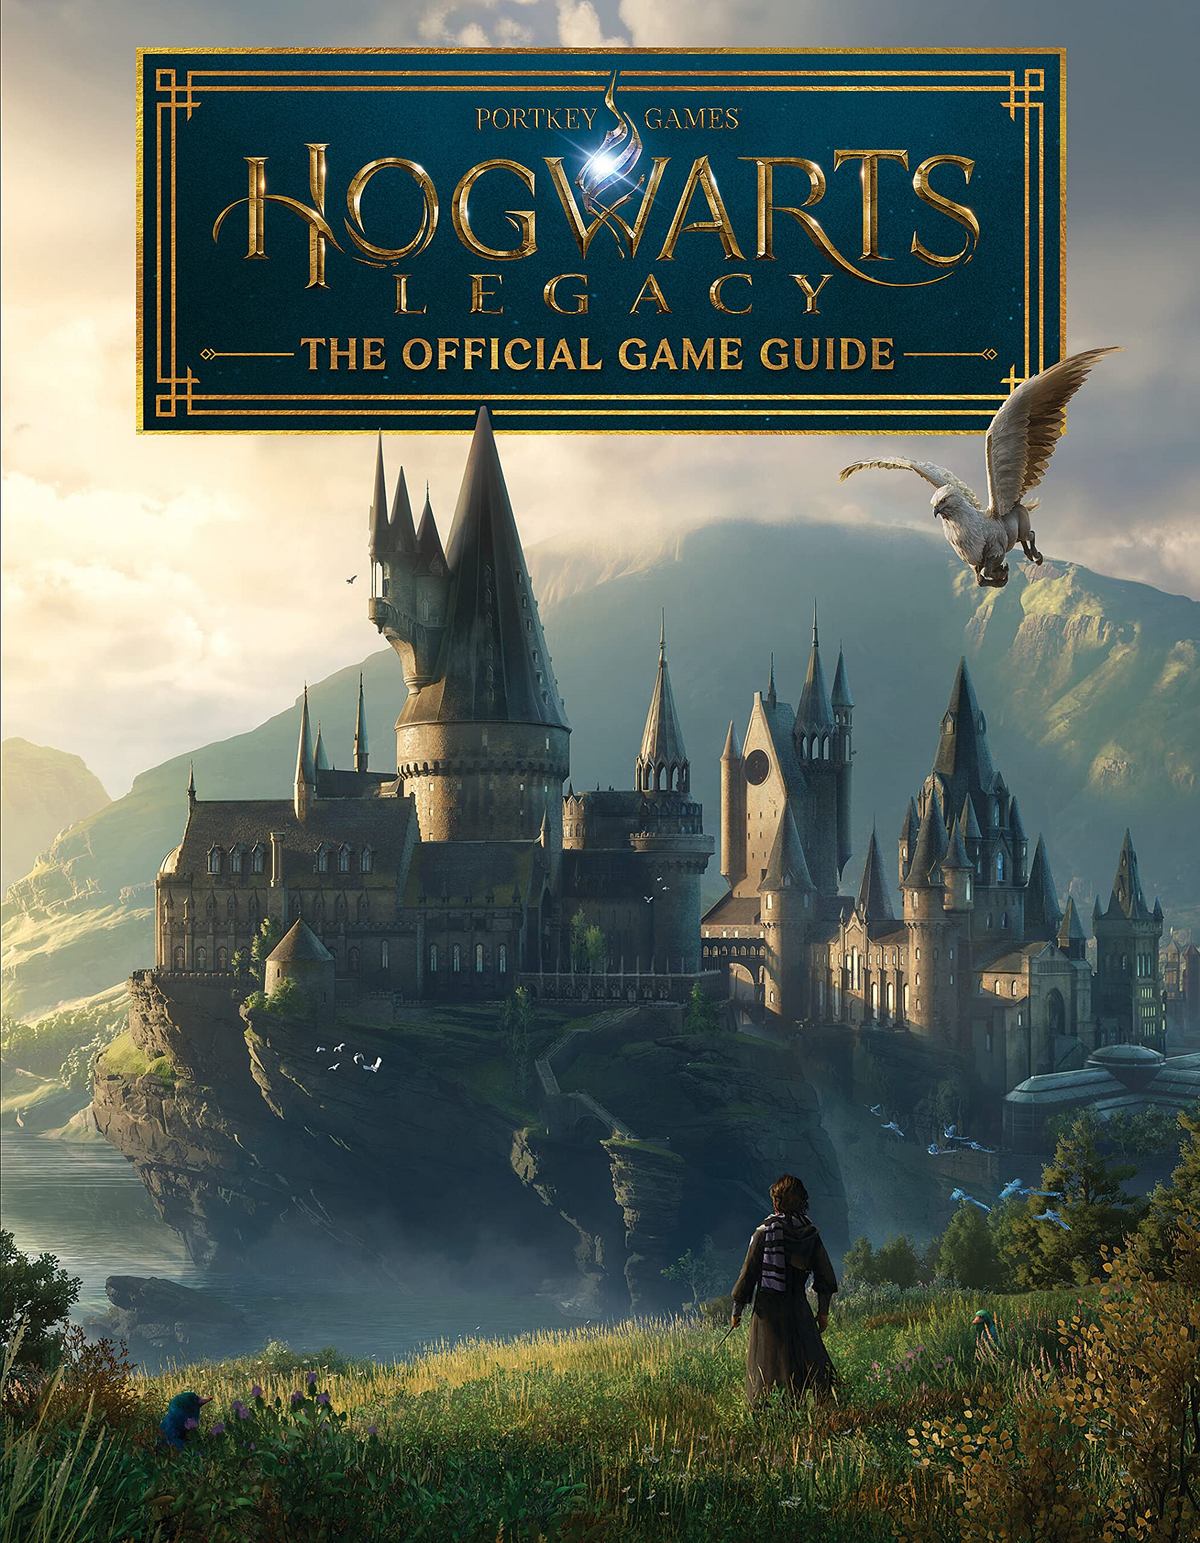 Steam Community :: Guide :: Hogwarts Legacy Achievements guide